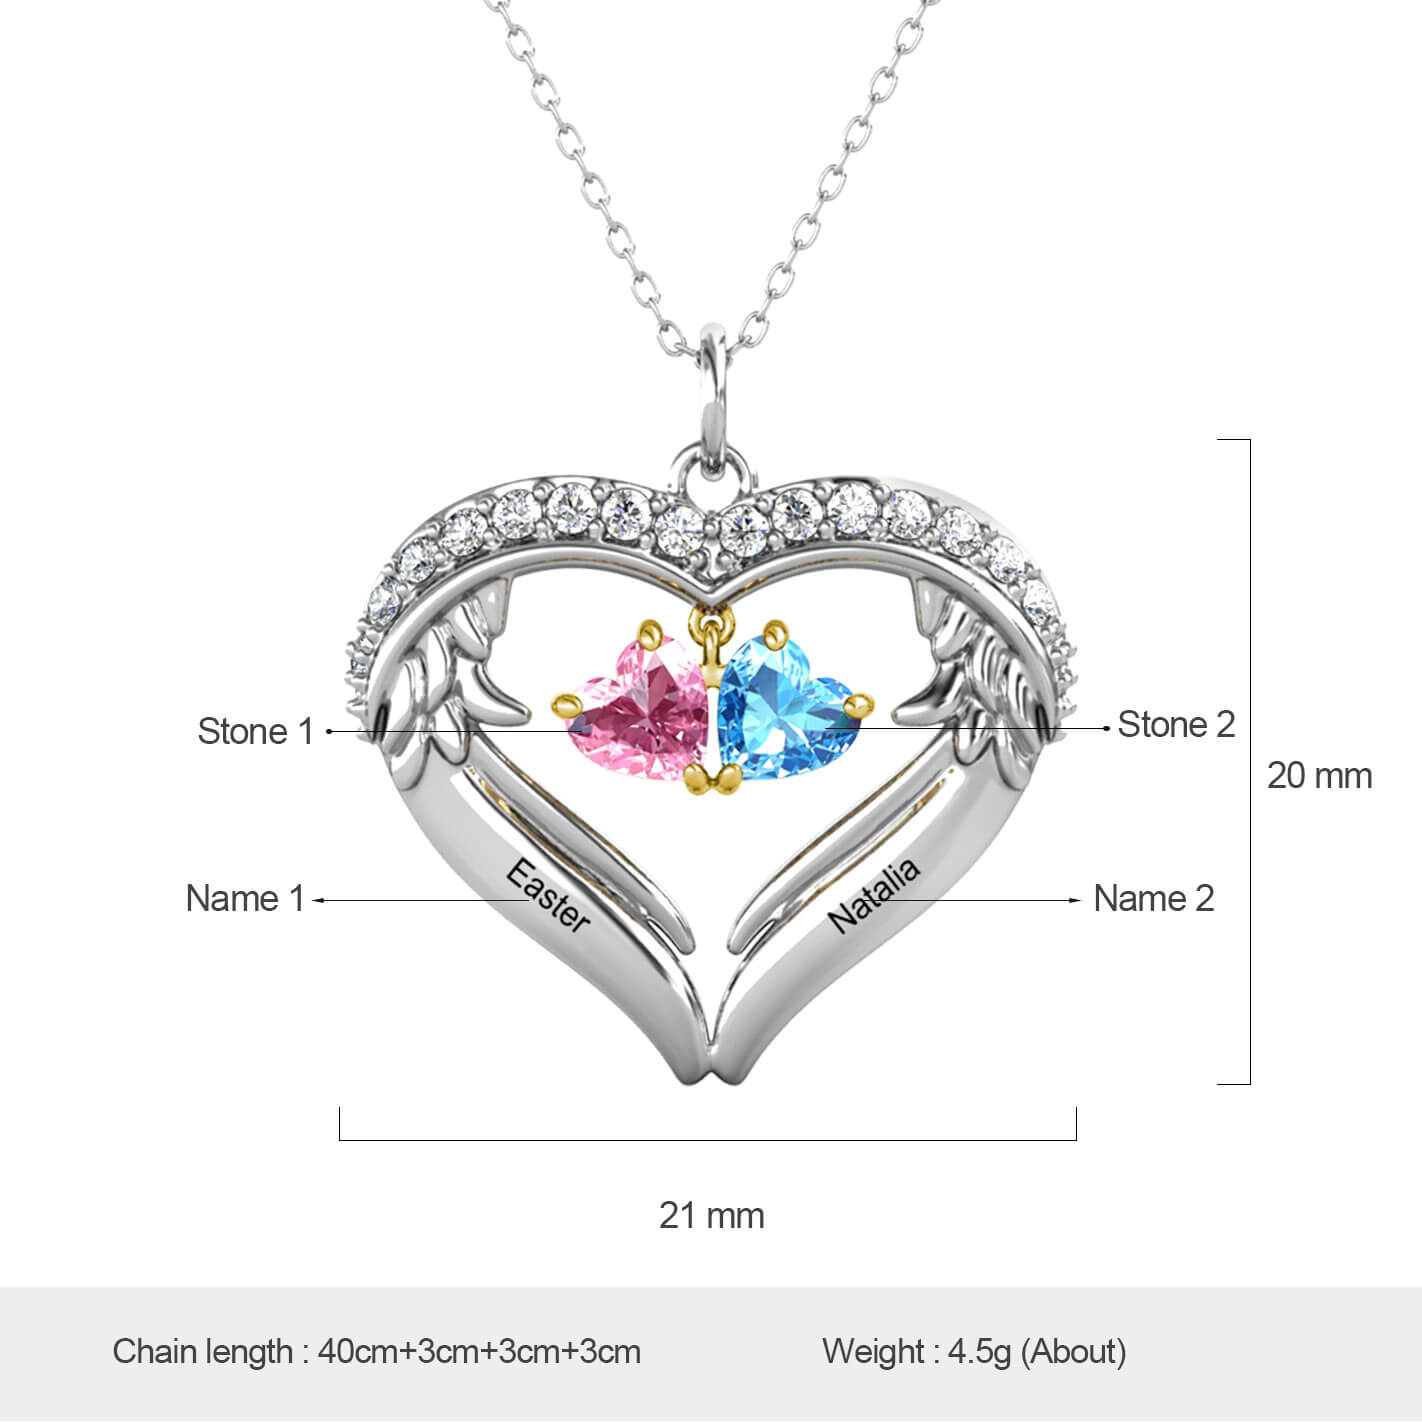 Star Set Birthstone Necklace in Sterling Silver - Elizabeth Scott Jewelry